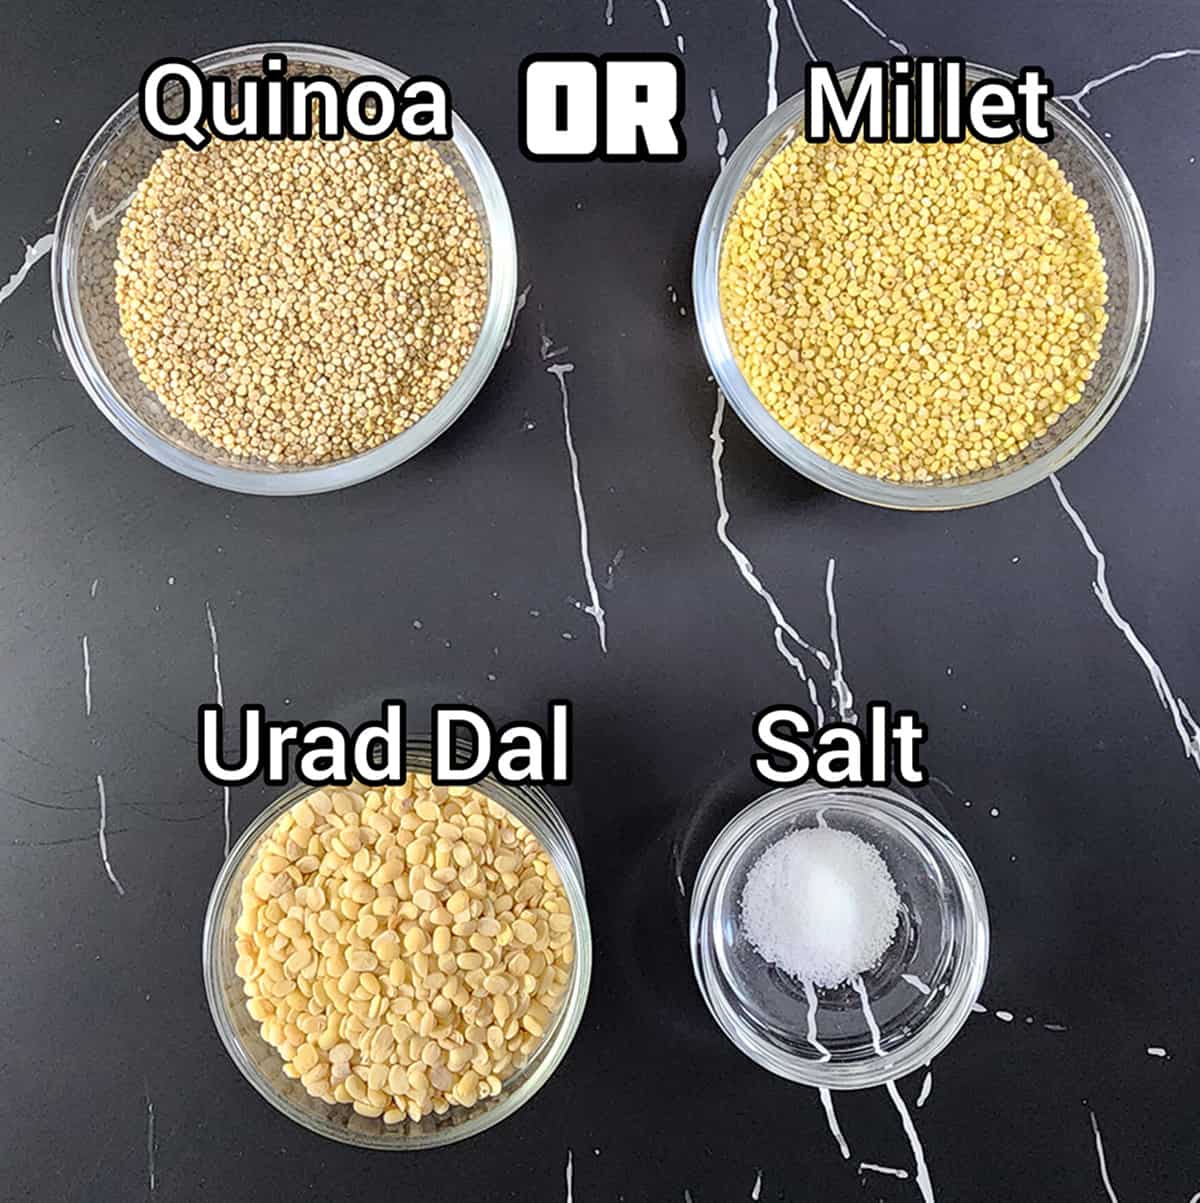 Ingredients used to make millet idli or quinoa idli. 